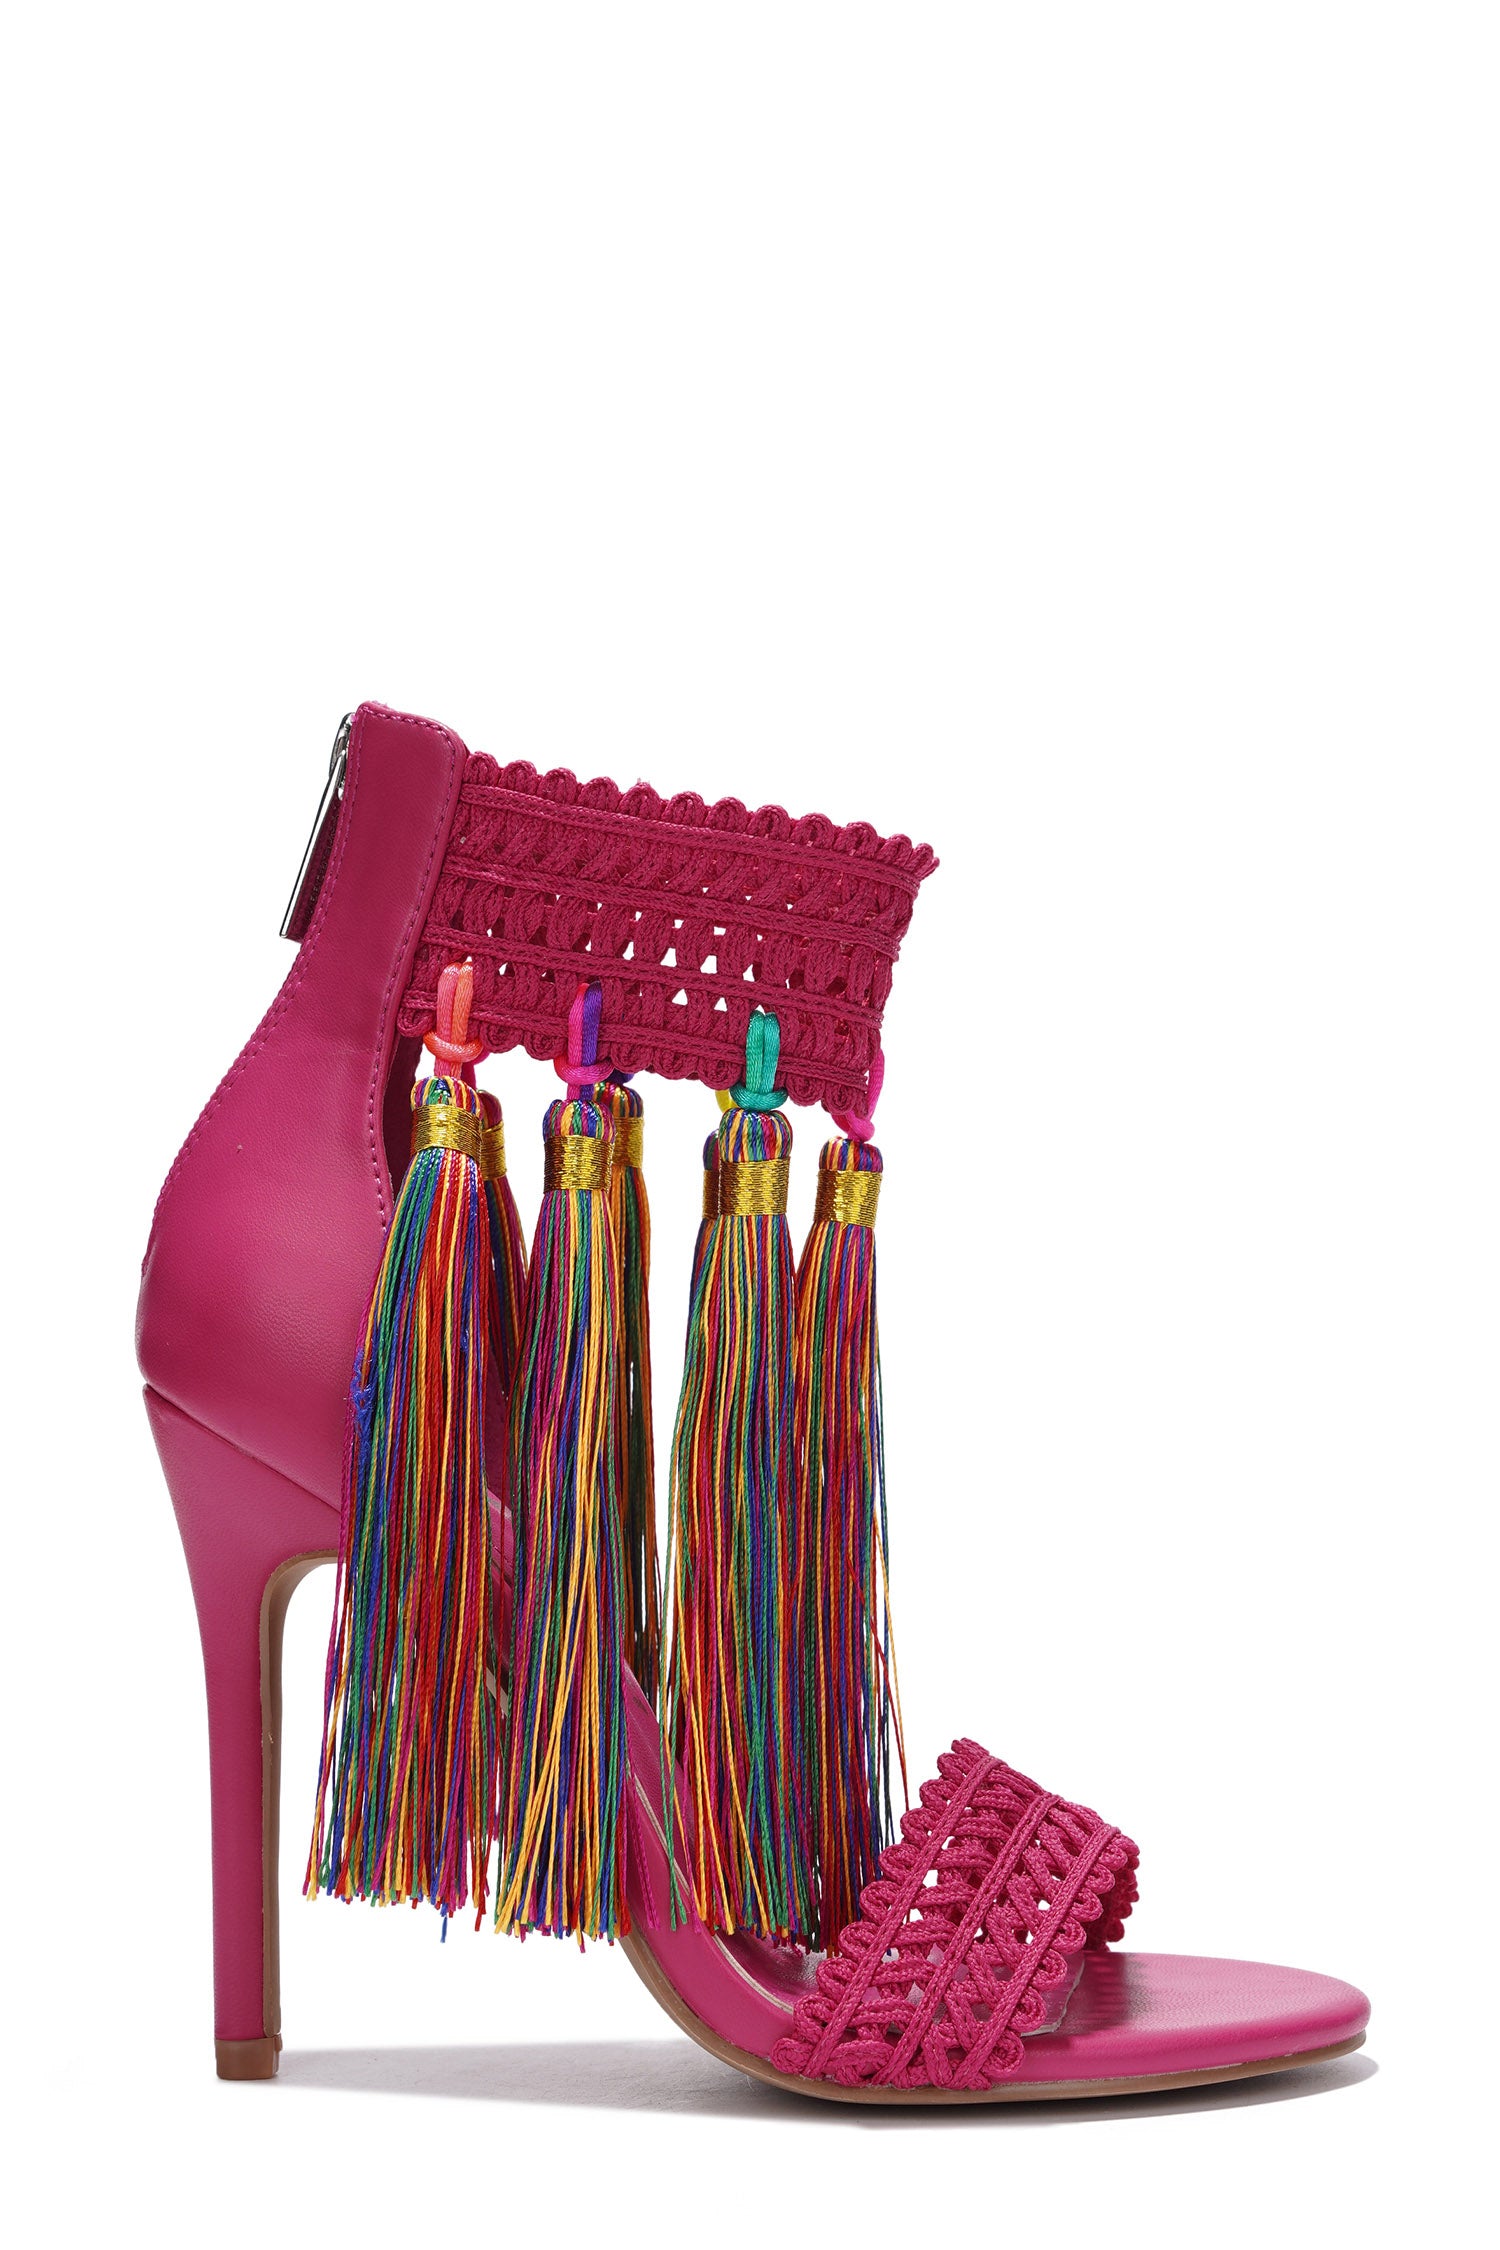 UrbanOG - Marisa Knit Crochet Tassels Open Toe Heels - HEELS